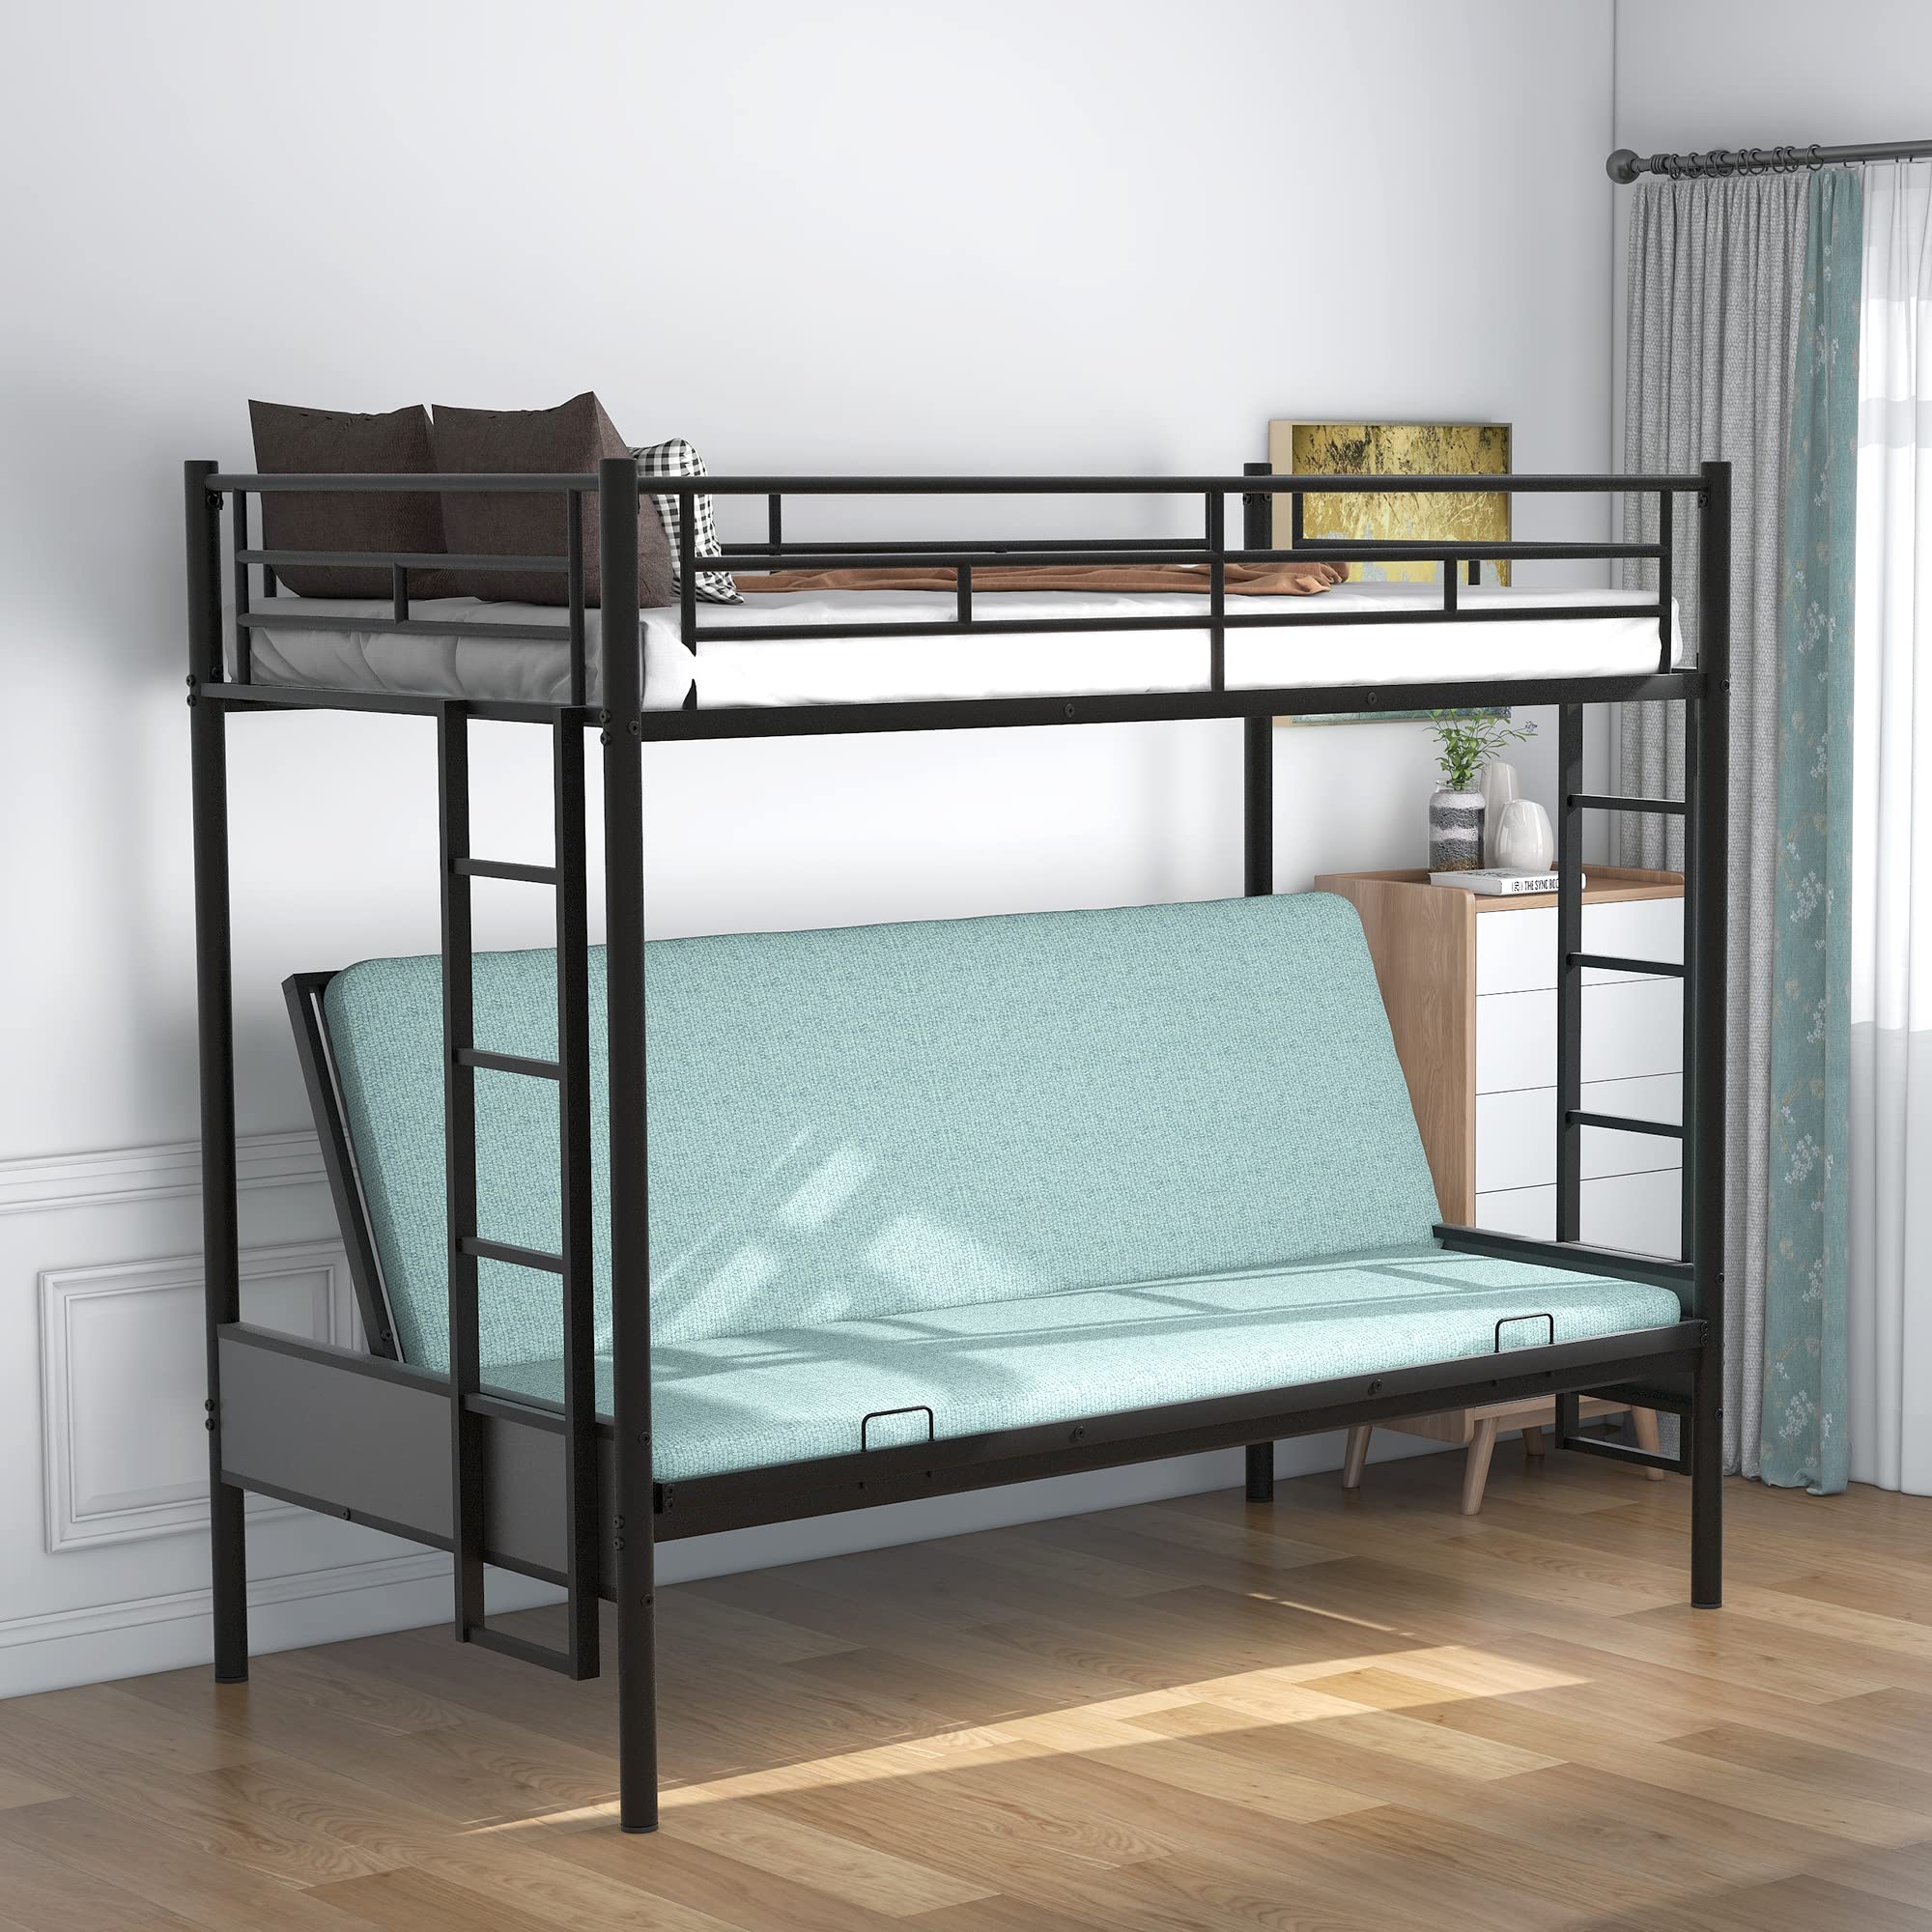 Softsea Twin Over Futon Metal Bunk Bed For Kids (Futon Bunk)